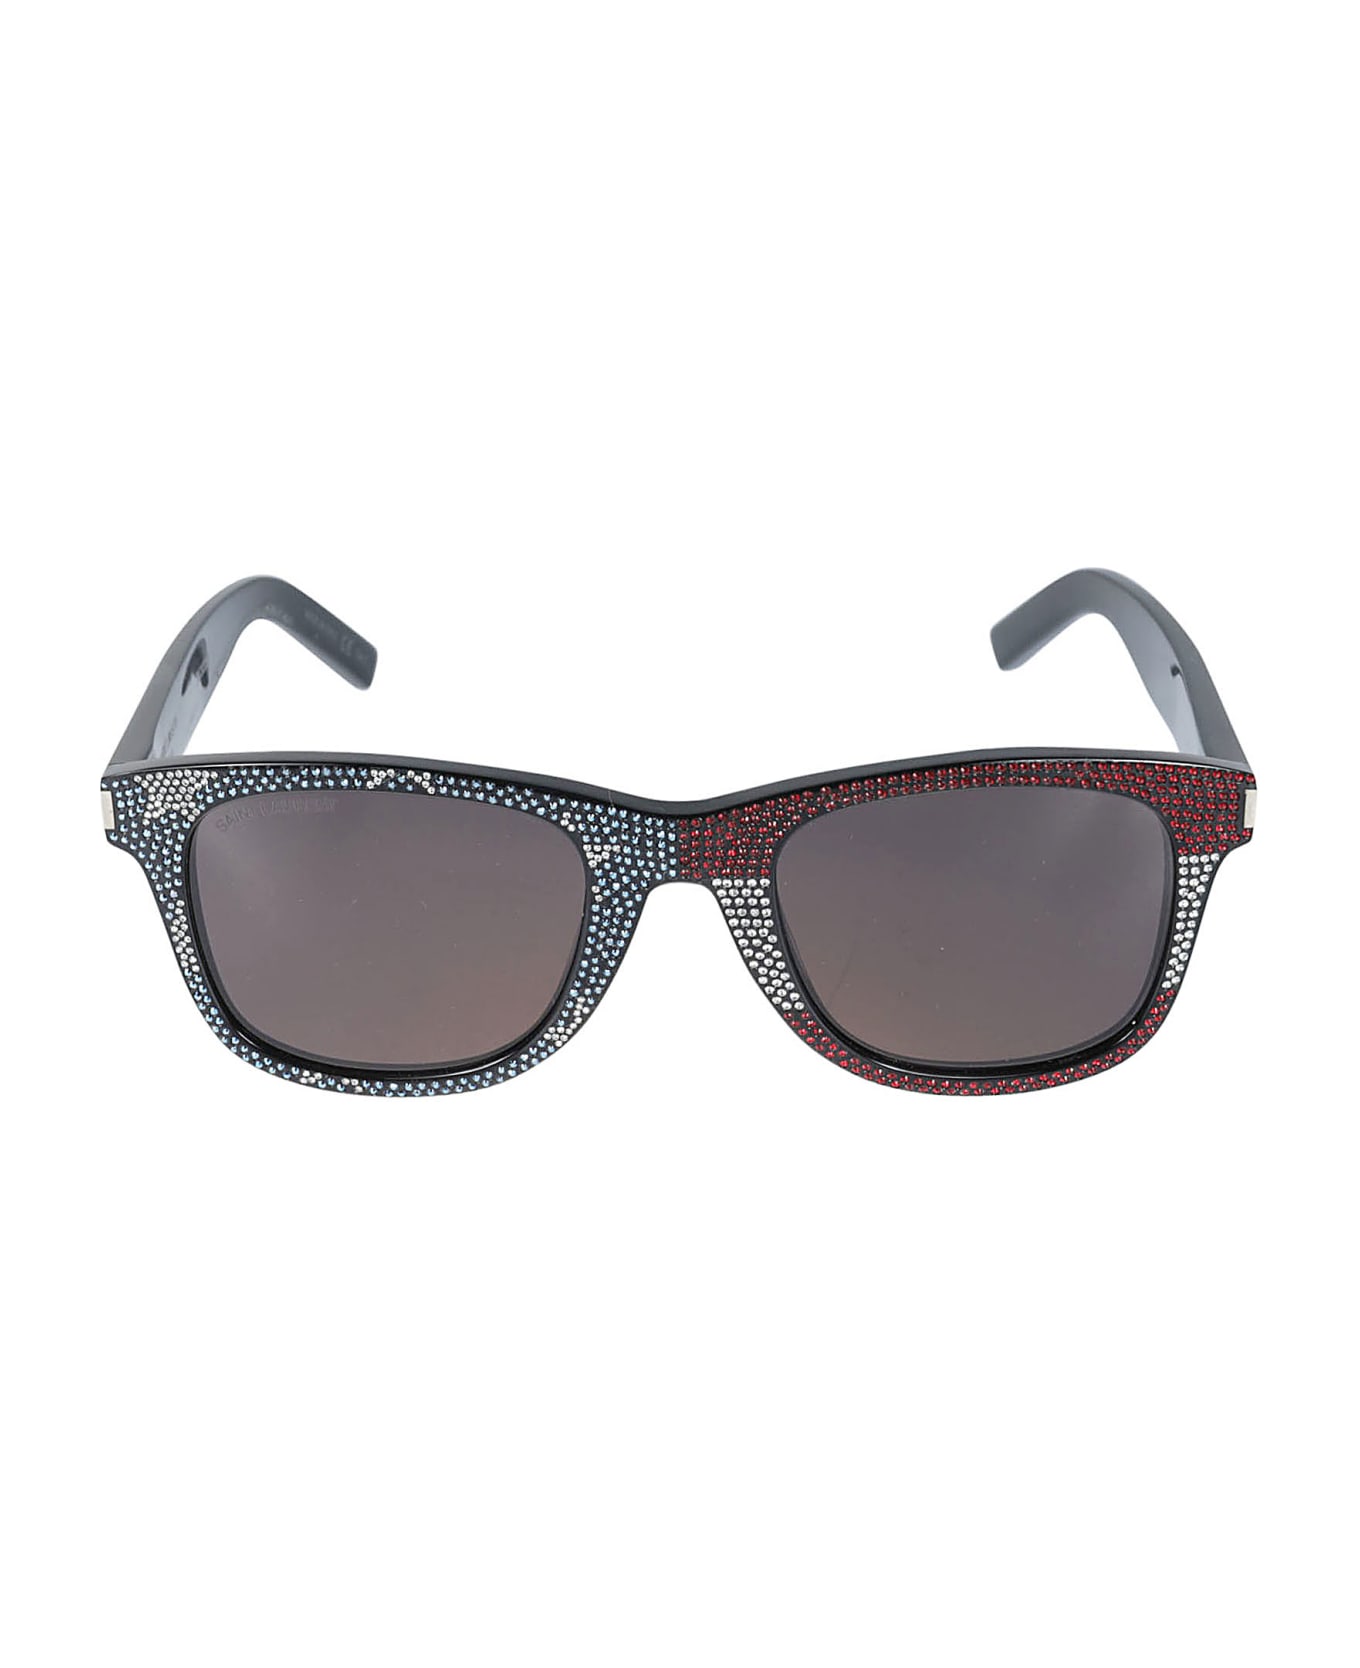 Saint Laurent Eyewear Square Frame Studded Sunglasses western - Black/Grey